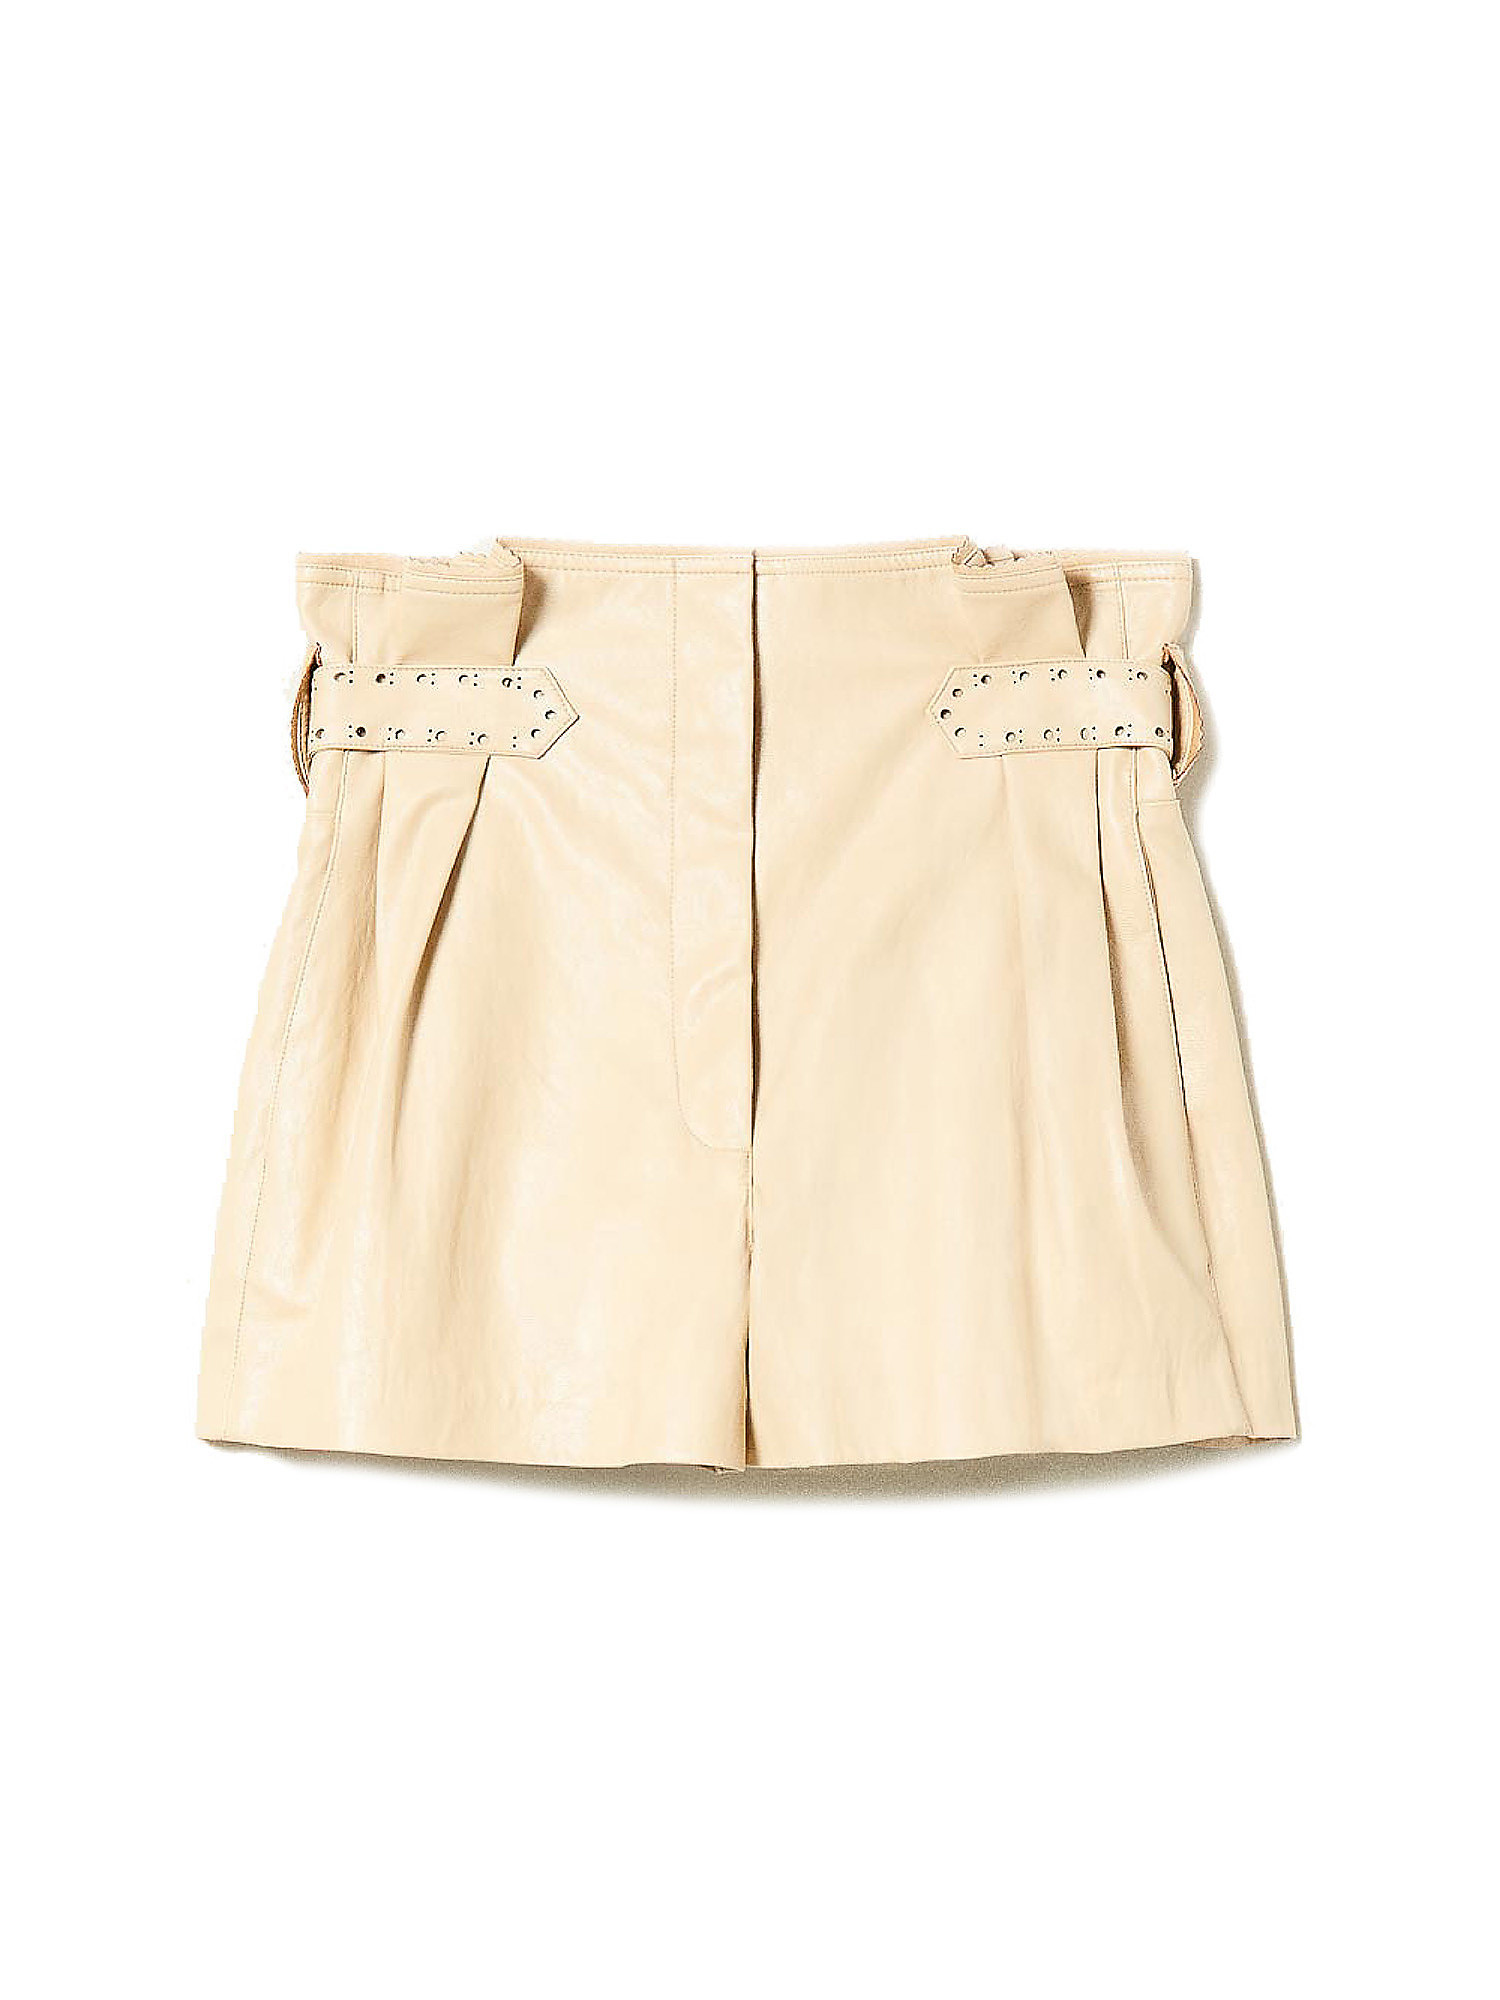 High waisted shorts with belt, Cream, large image number 0